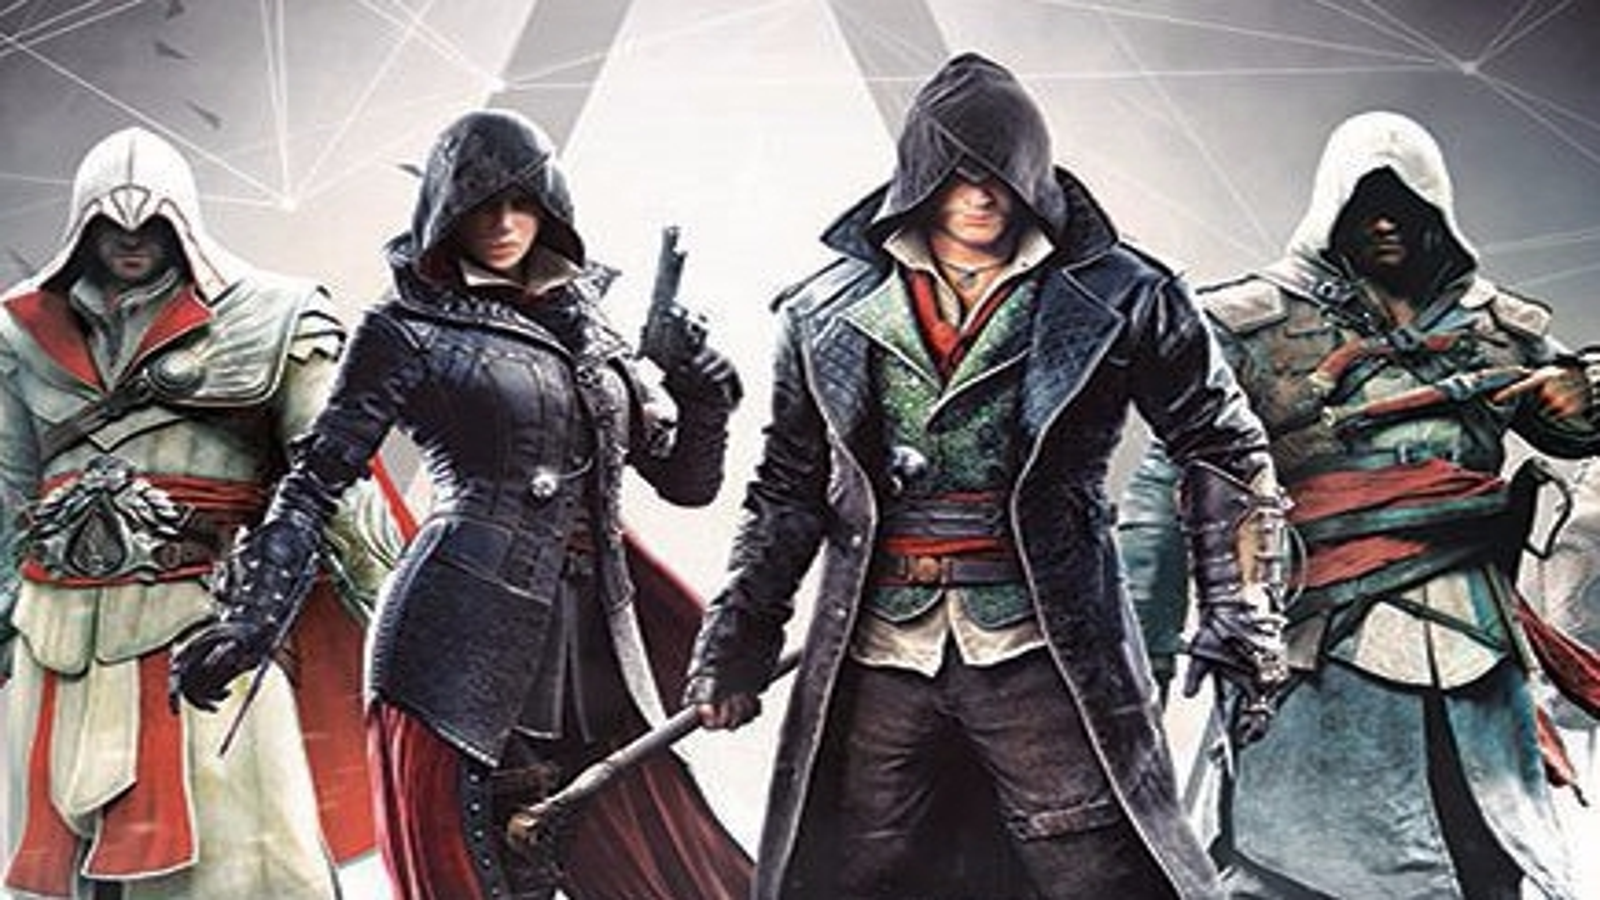 Meet the assassins of Assassin's Creed